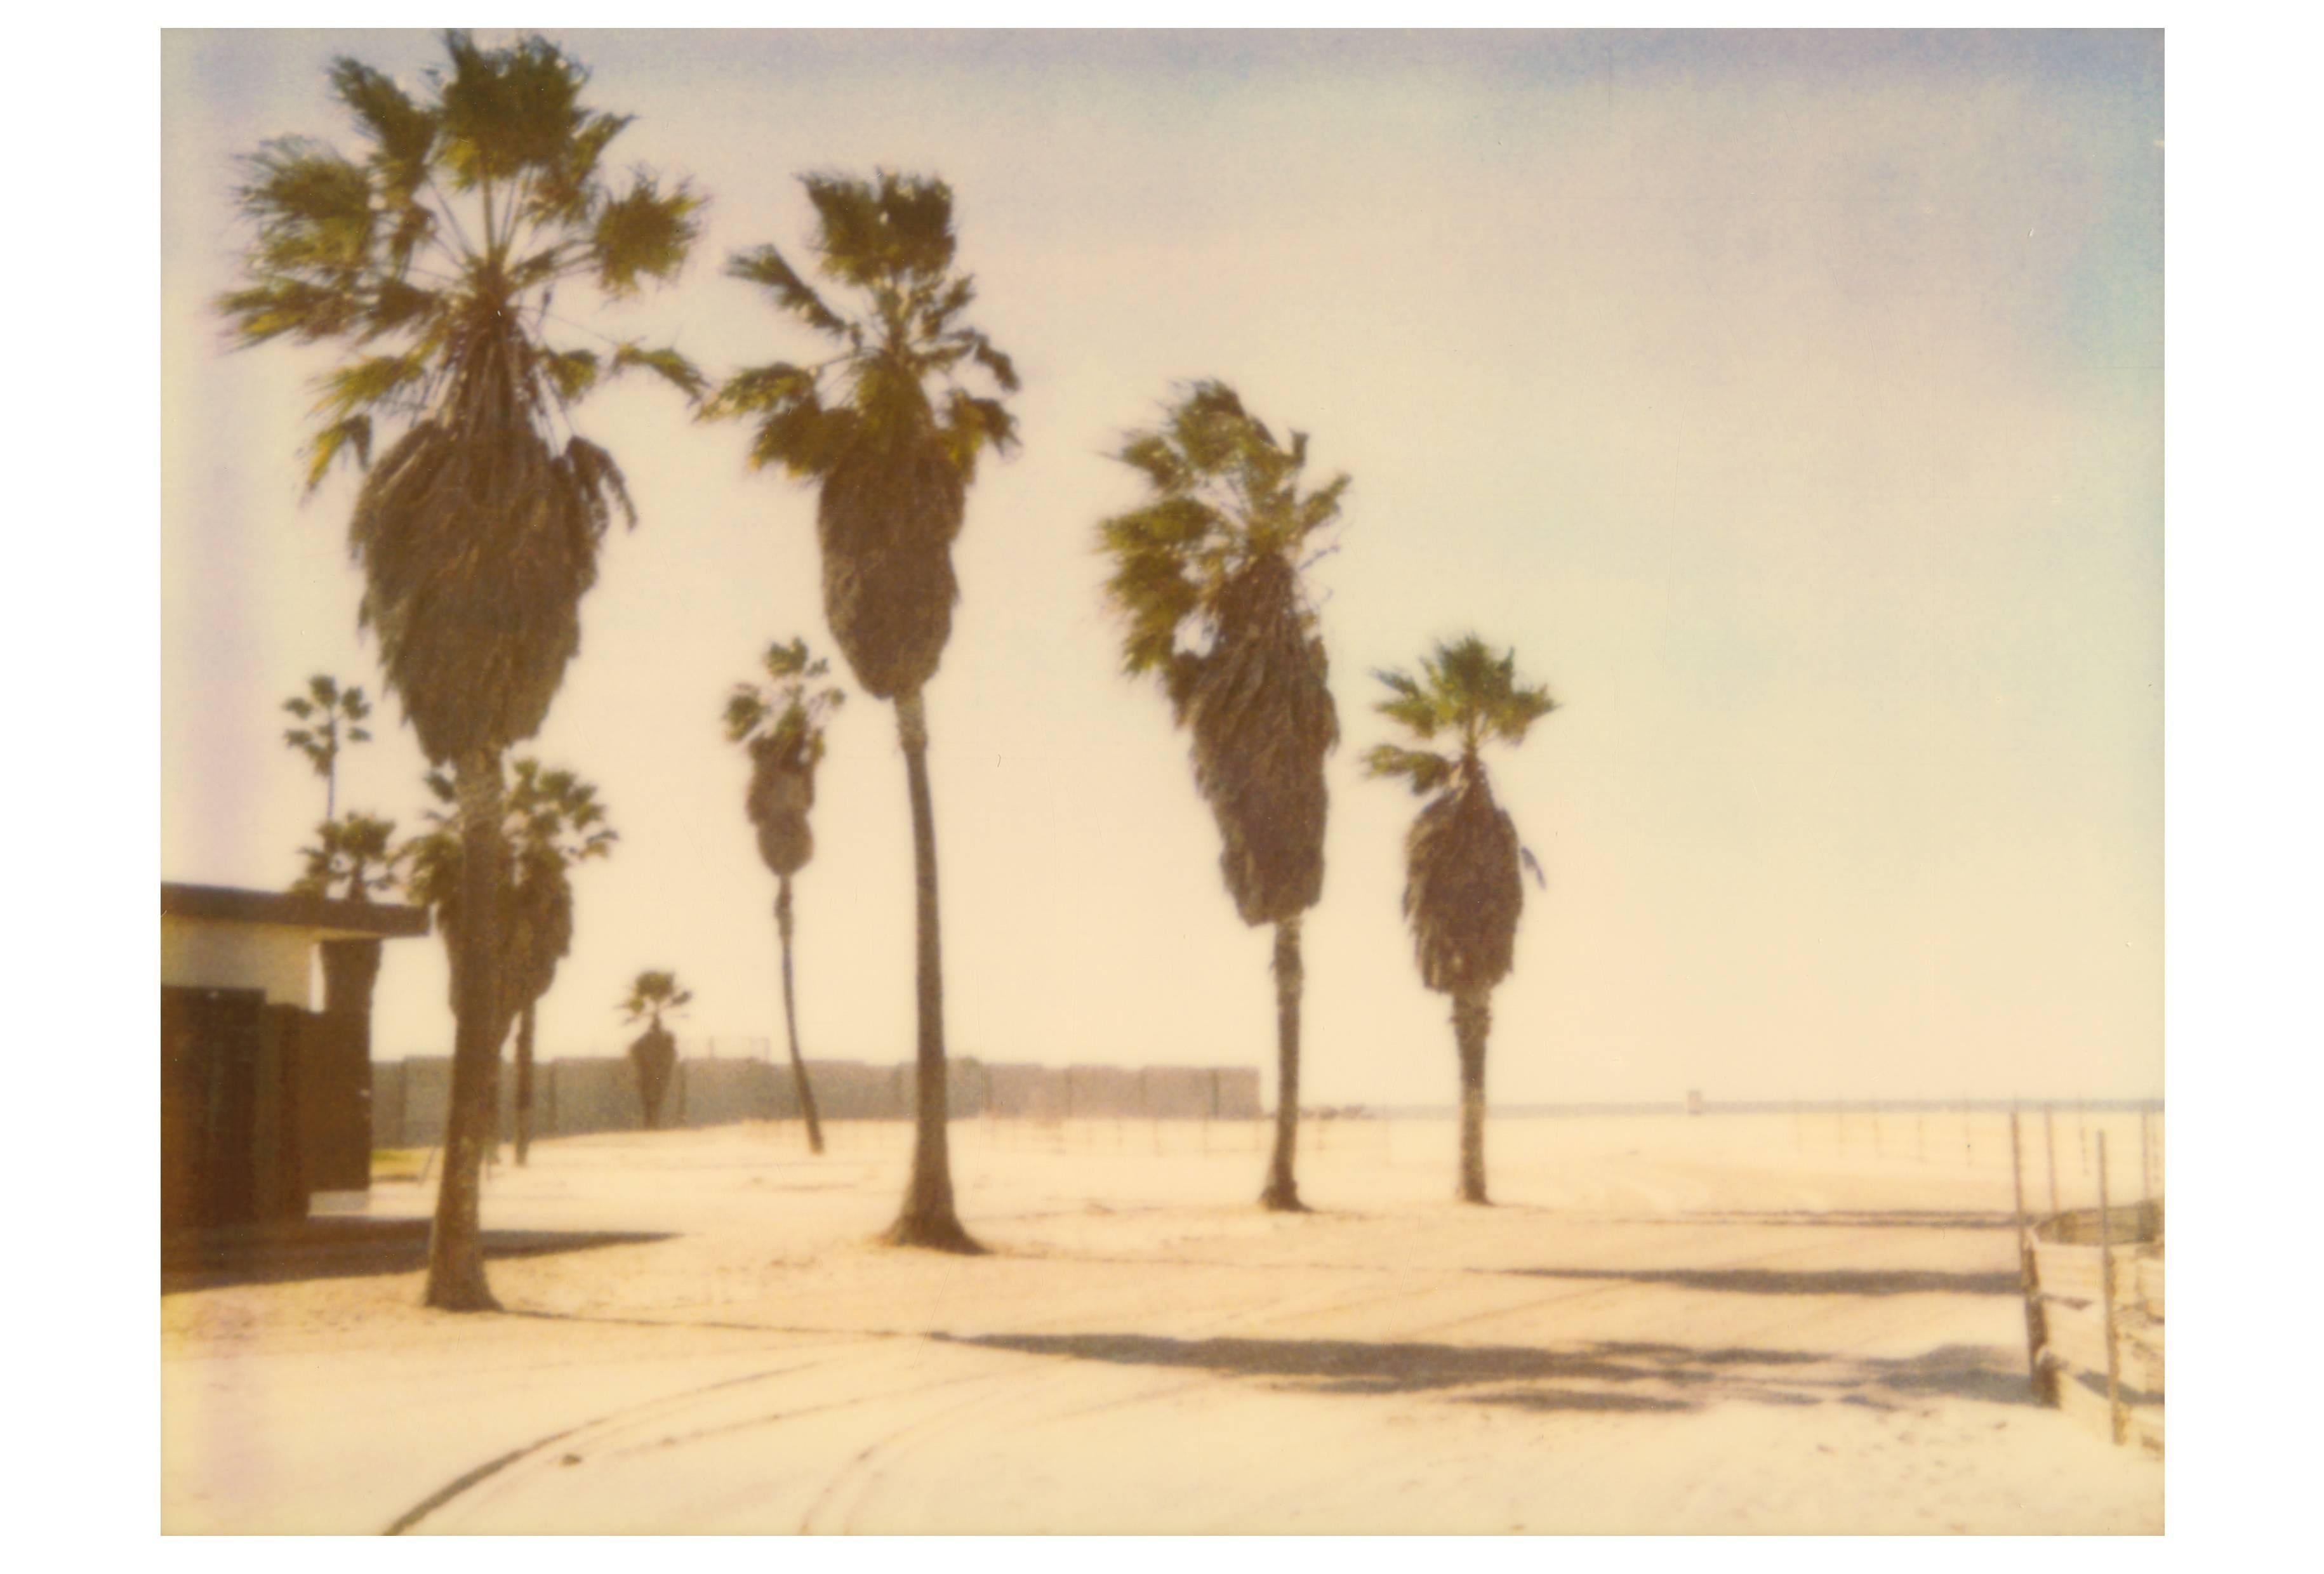 Stefanie Schneider Landscape Photograph - Palm Trees in Venice - analog C-Print, hand-printed by the artist, Polaroid